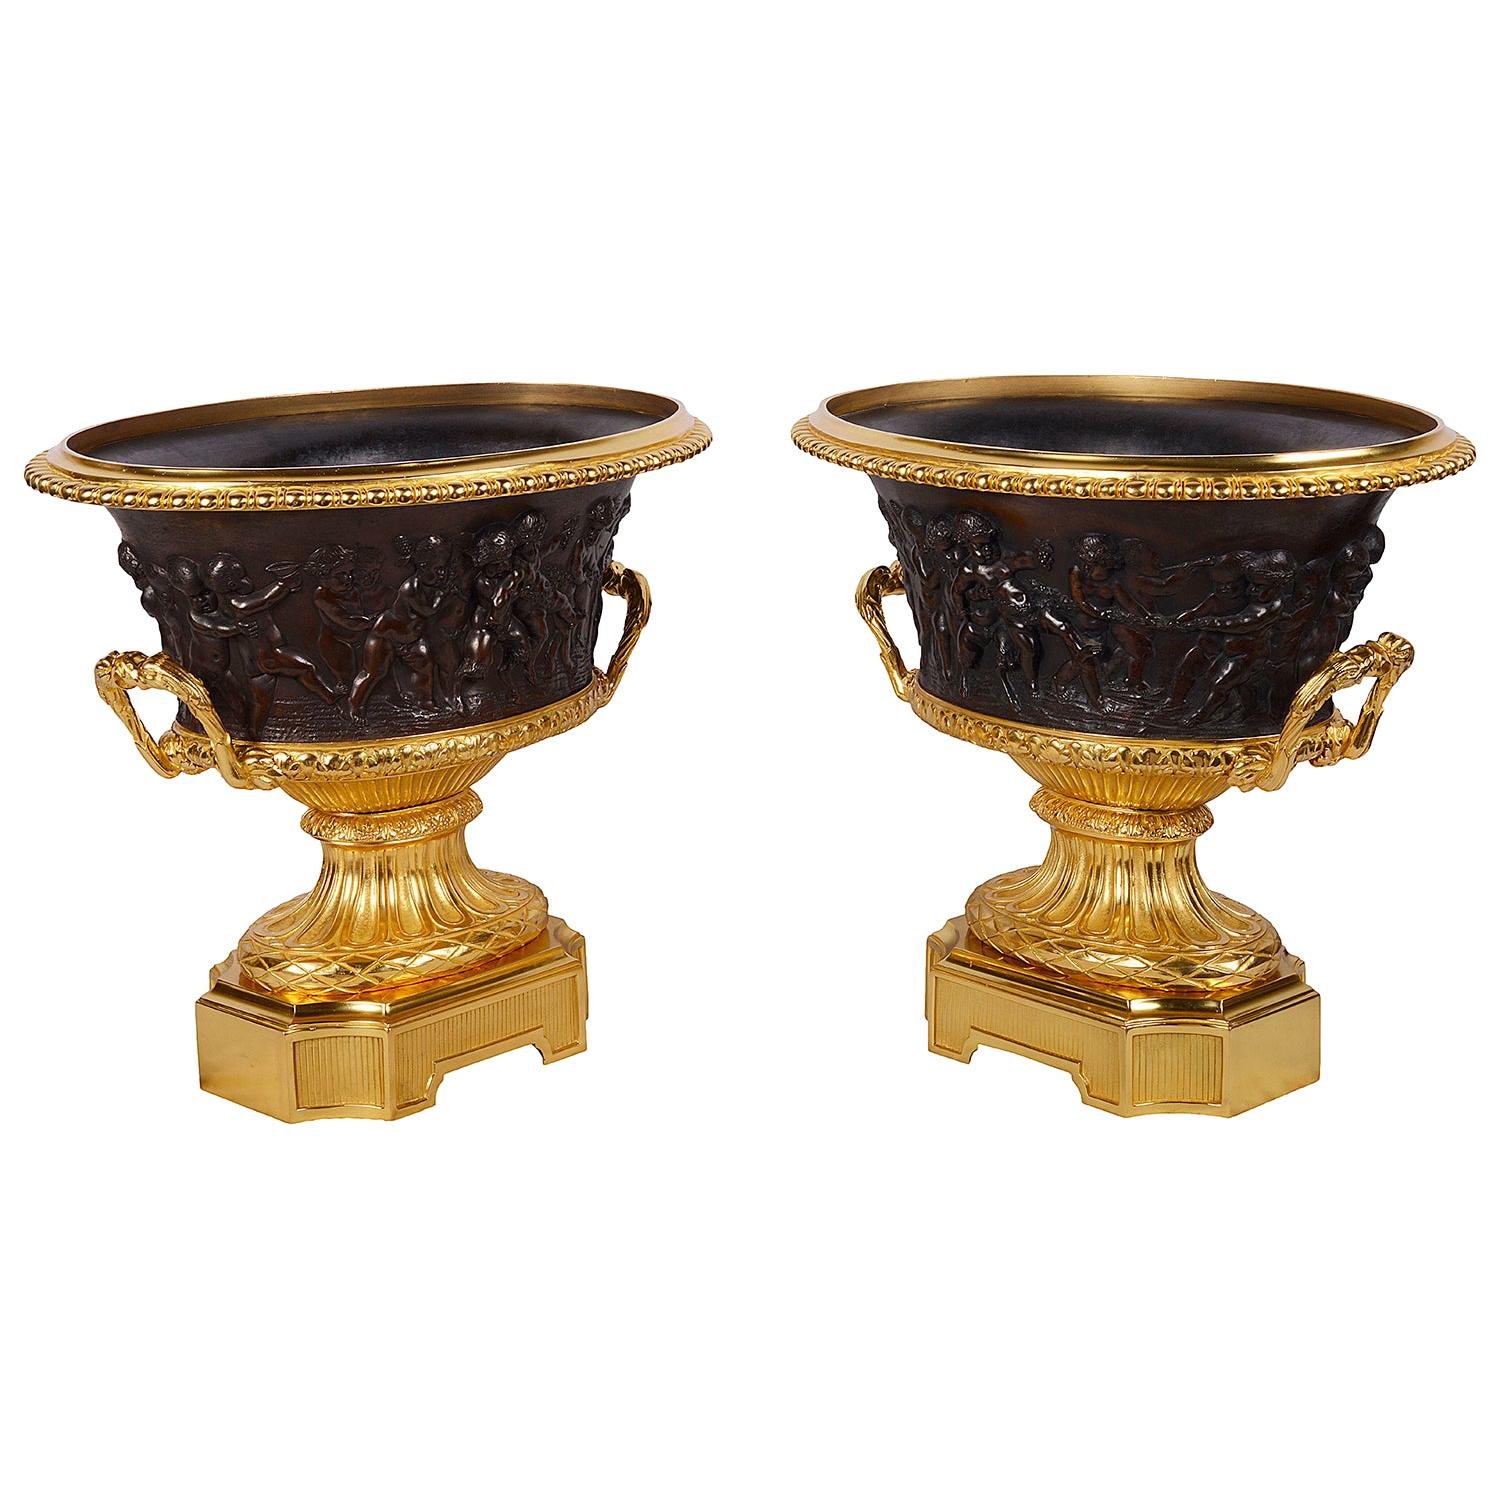 Large Pair of Grand Tour Campana Bronze Urns, 19th Century